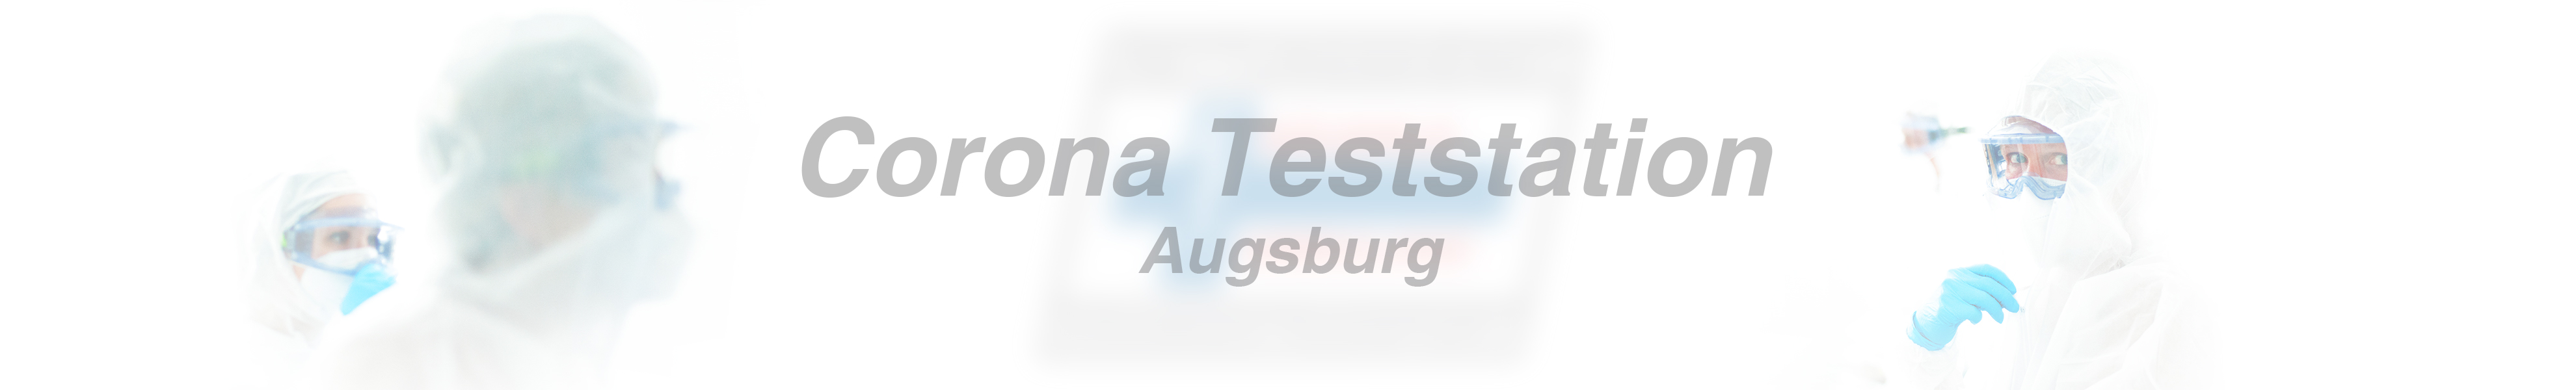 Corona Teststation Augsburg